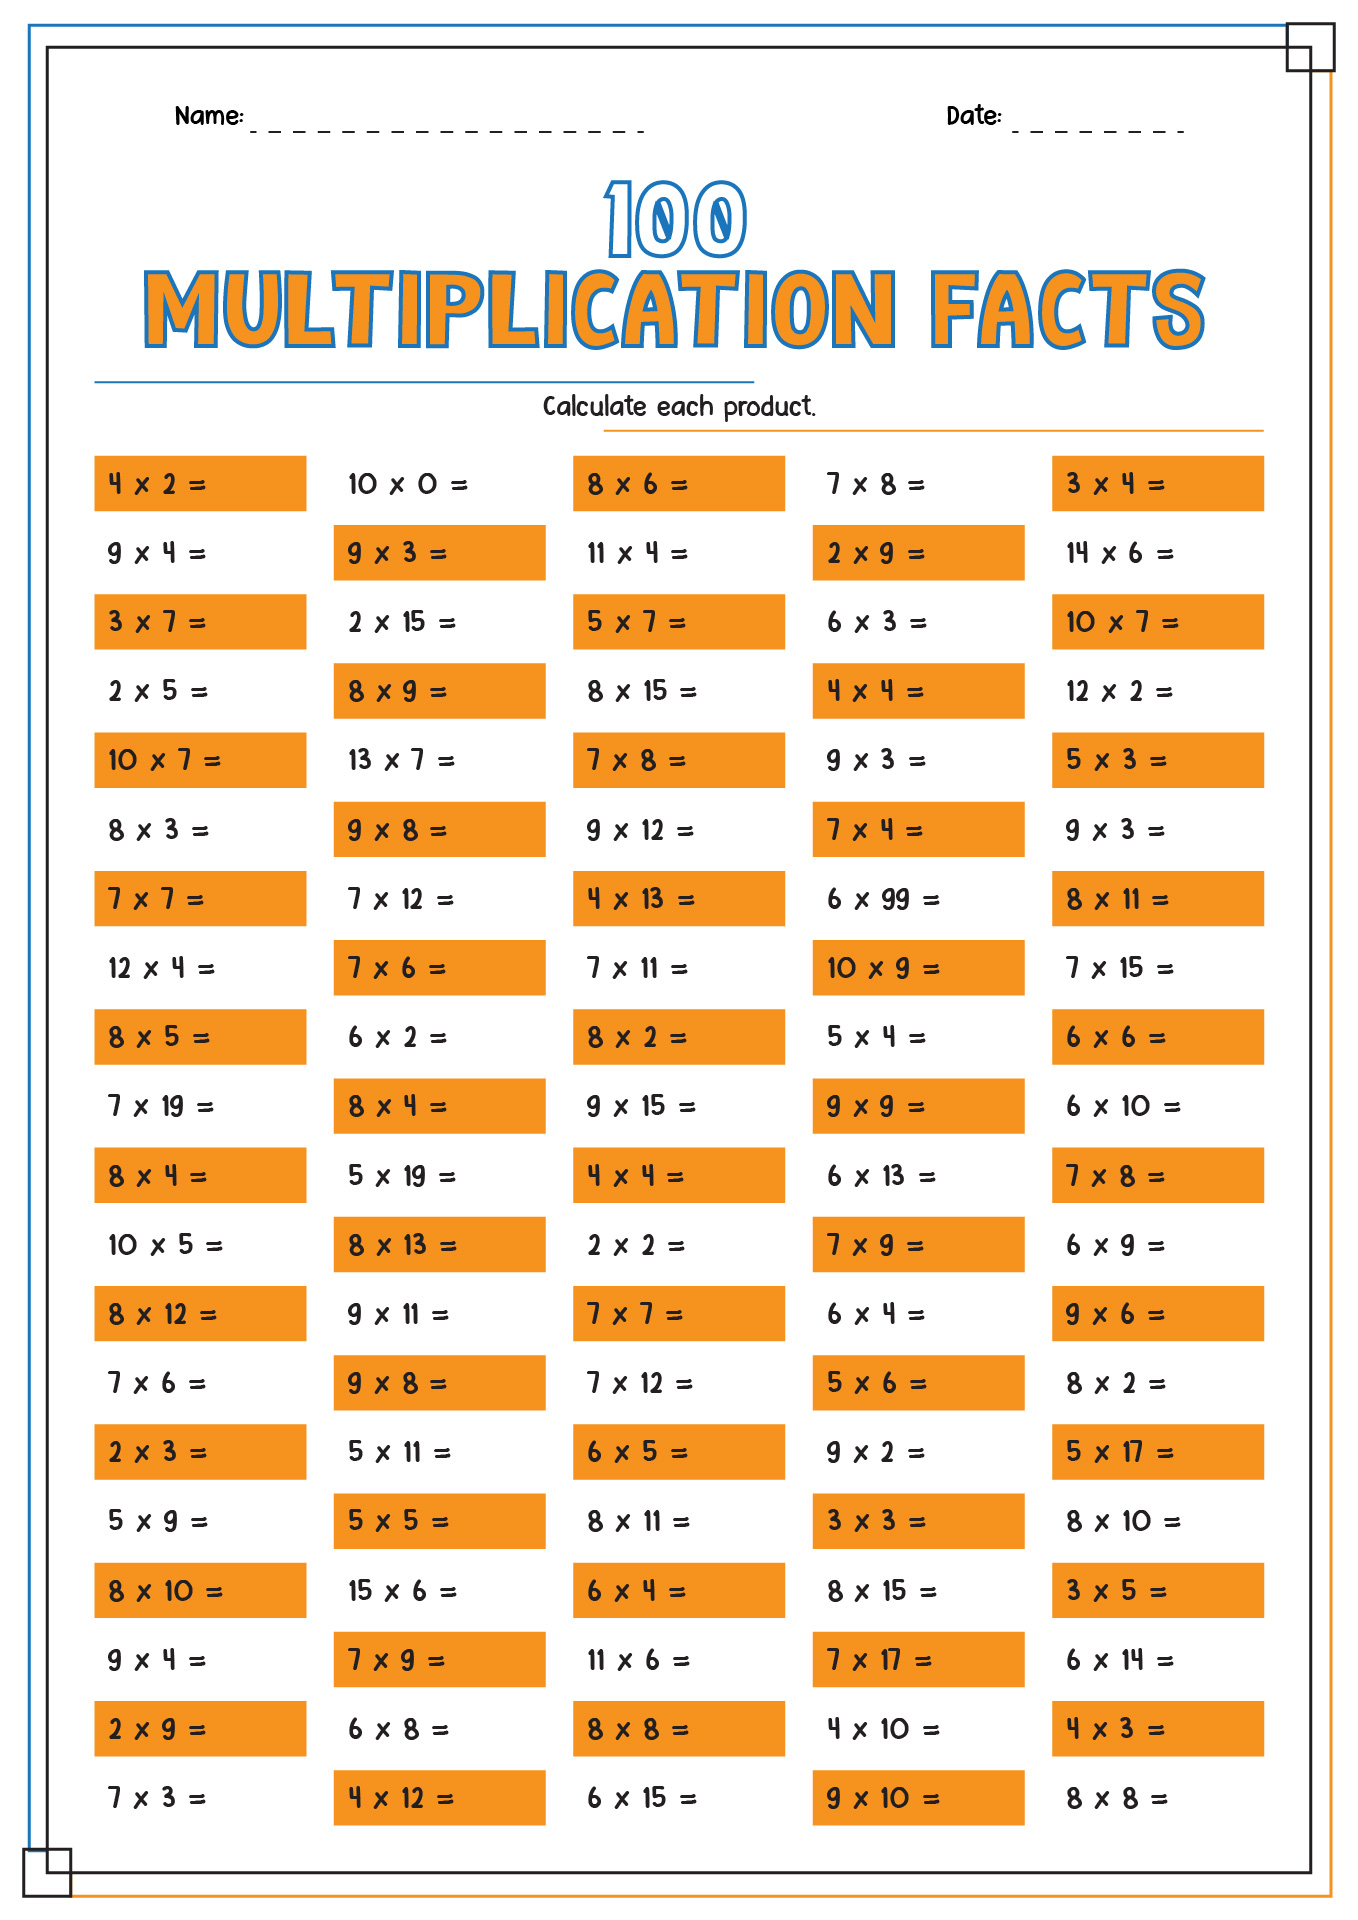 Multiplication Facts Worksheet 100 Problems